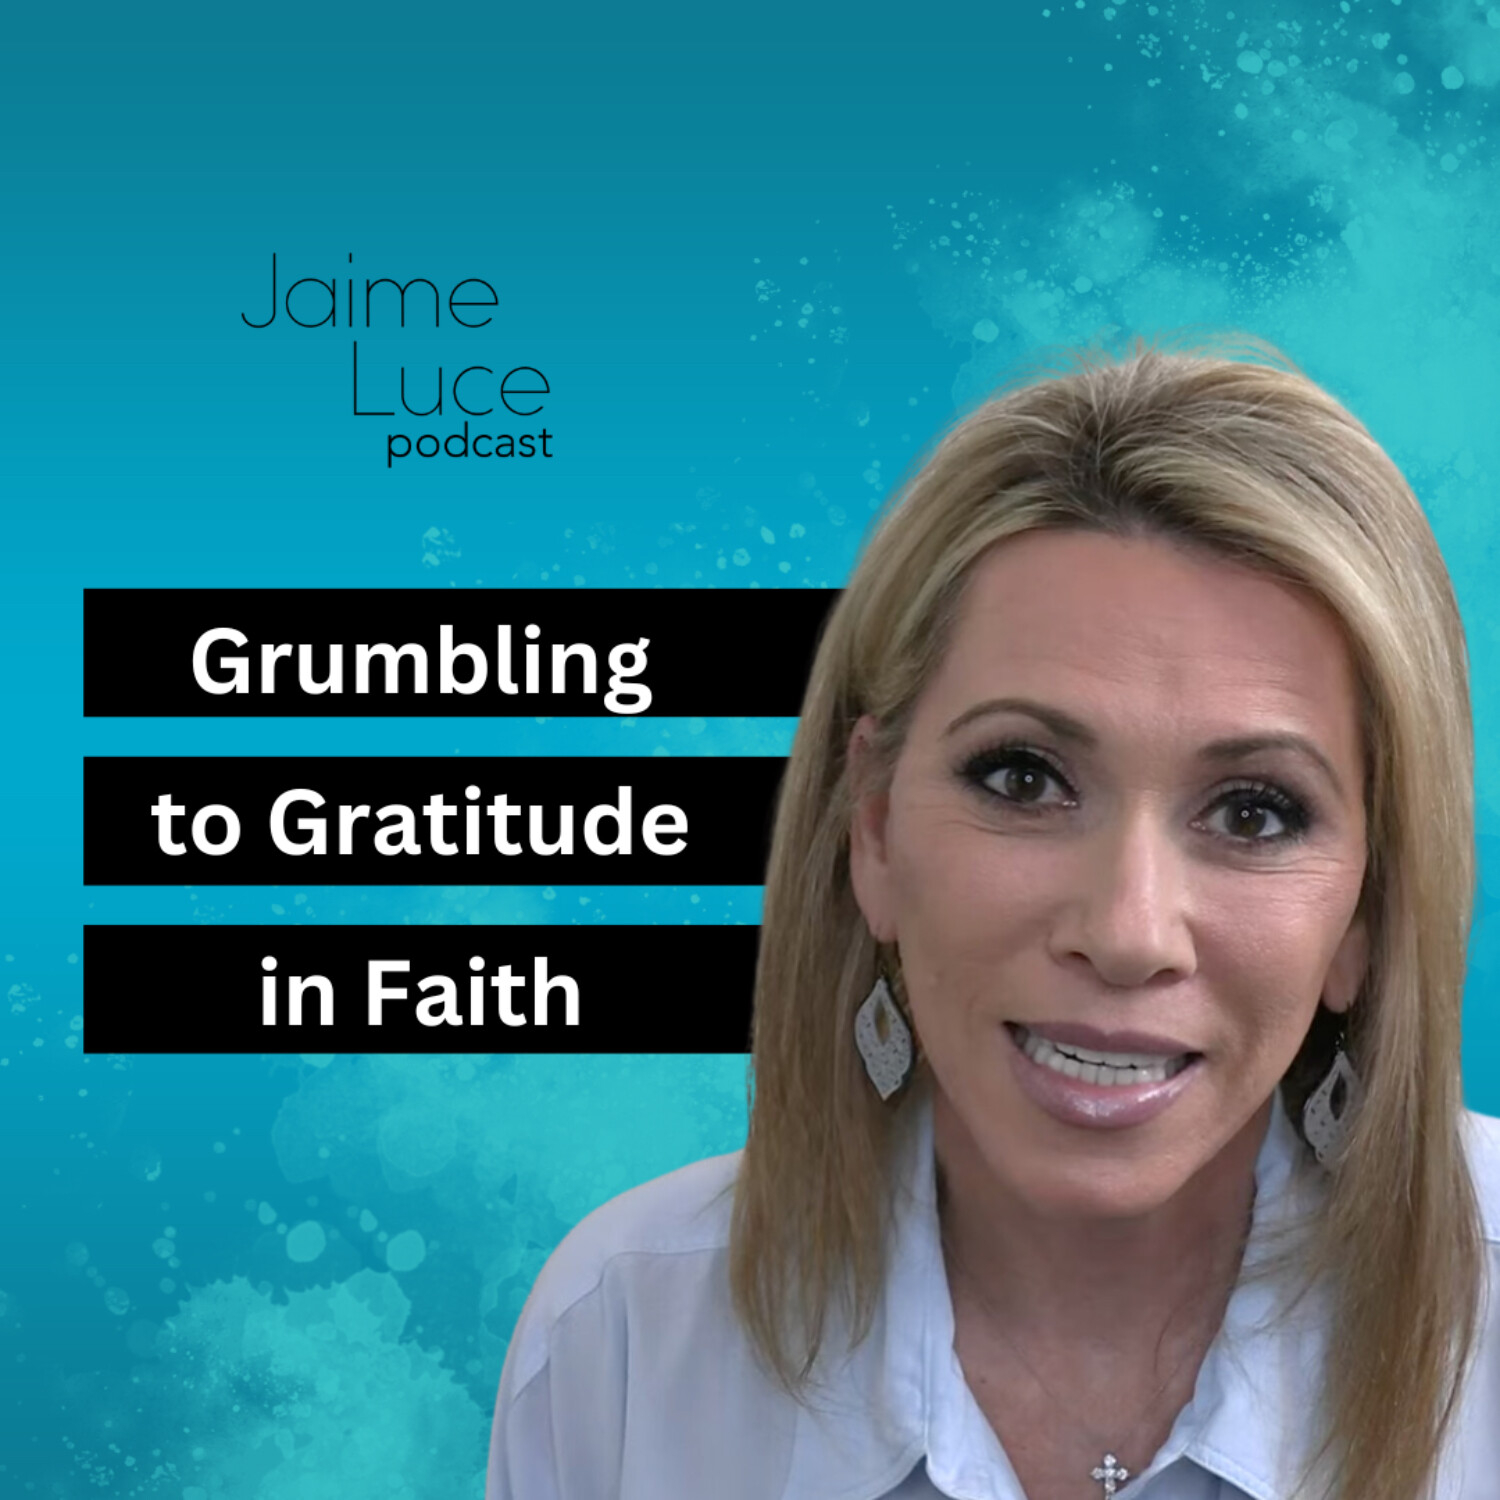 Grumbling to Gratitude in Faith